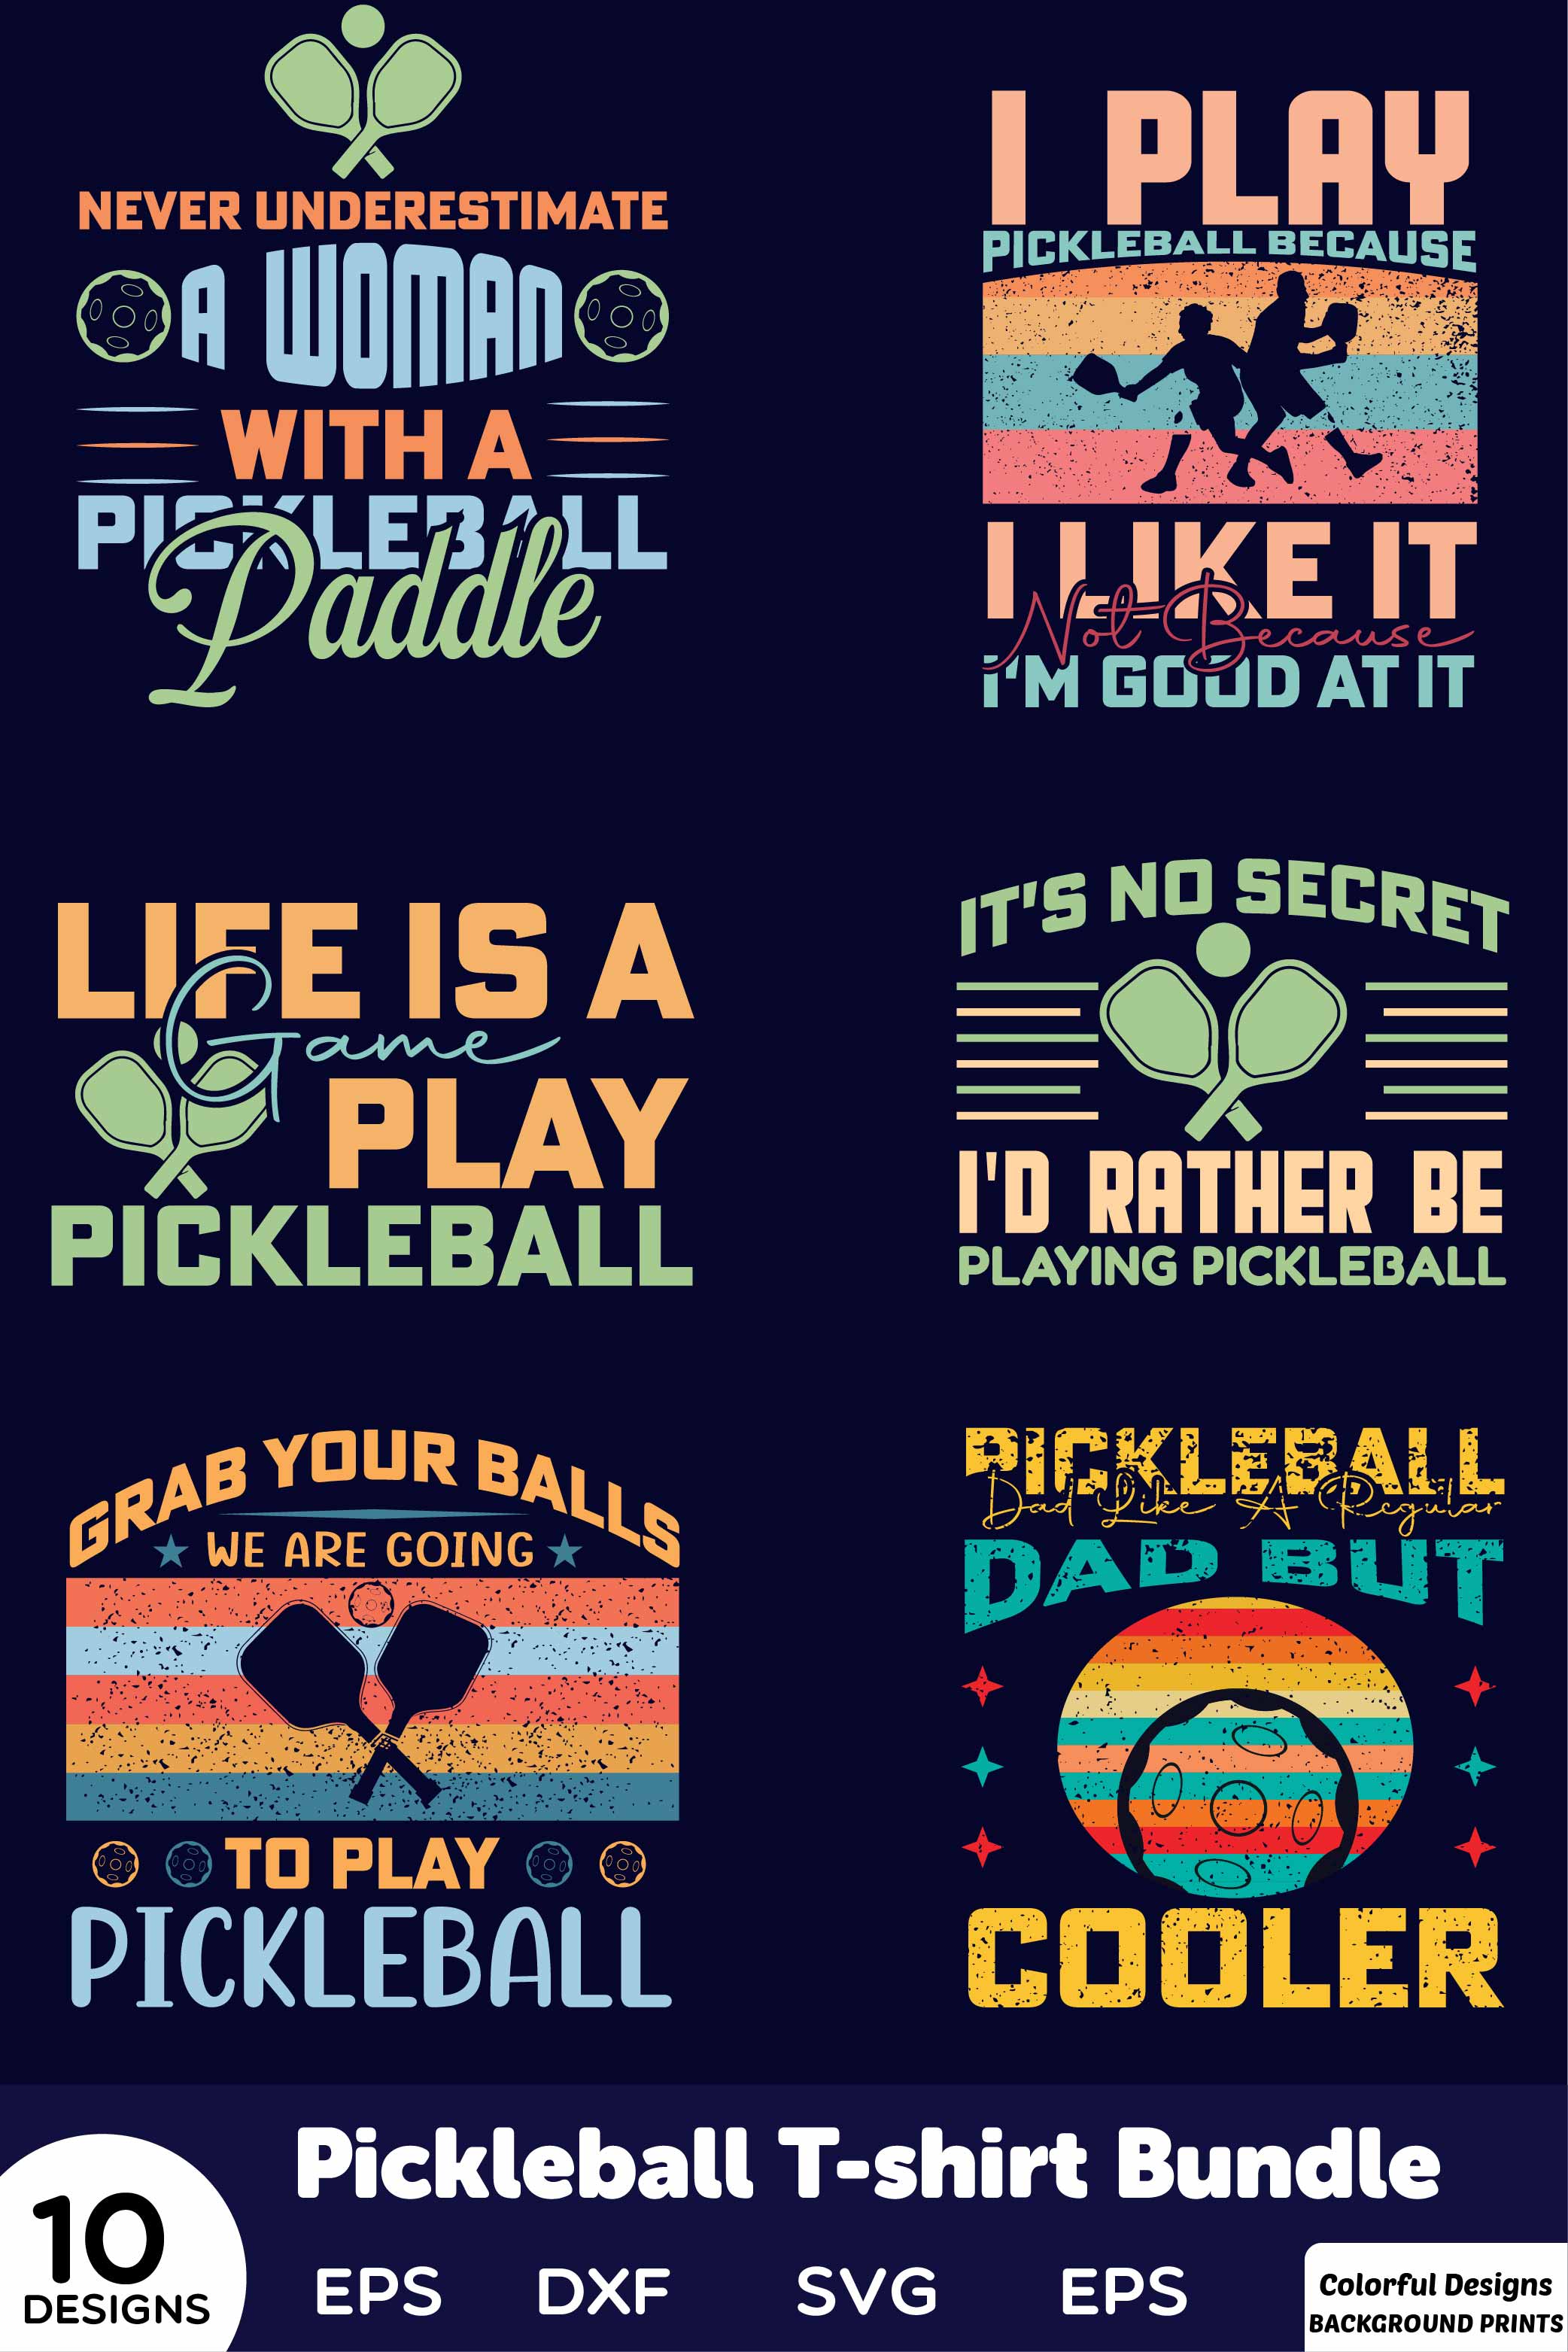 pickleball t-shirt bundle pinterest preview image.